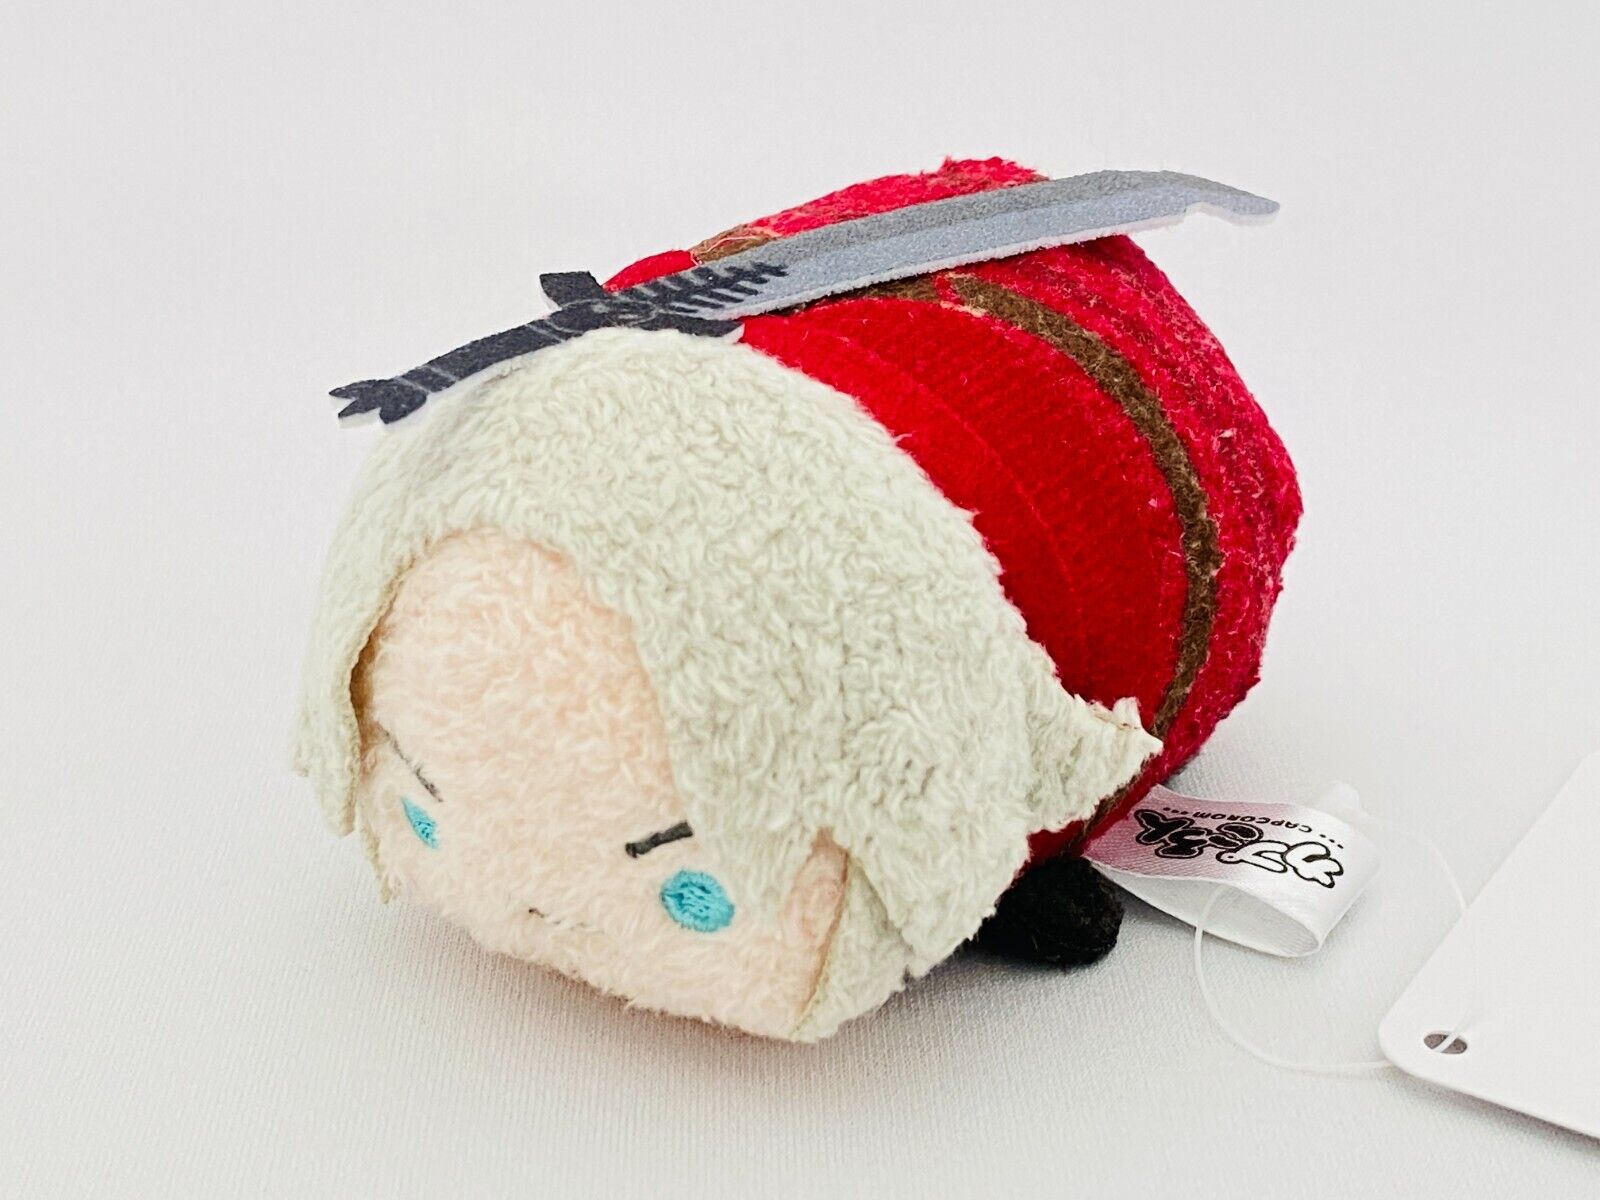 CAPCOM Capukoron mascot plush toy Dante Devil May Cry 5 Stuffed toy Japan store